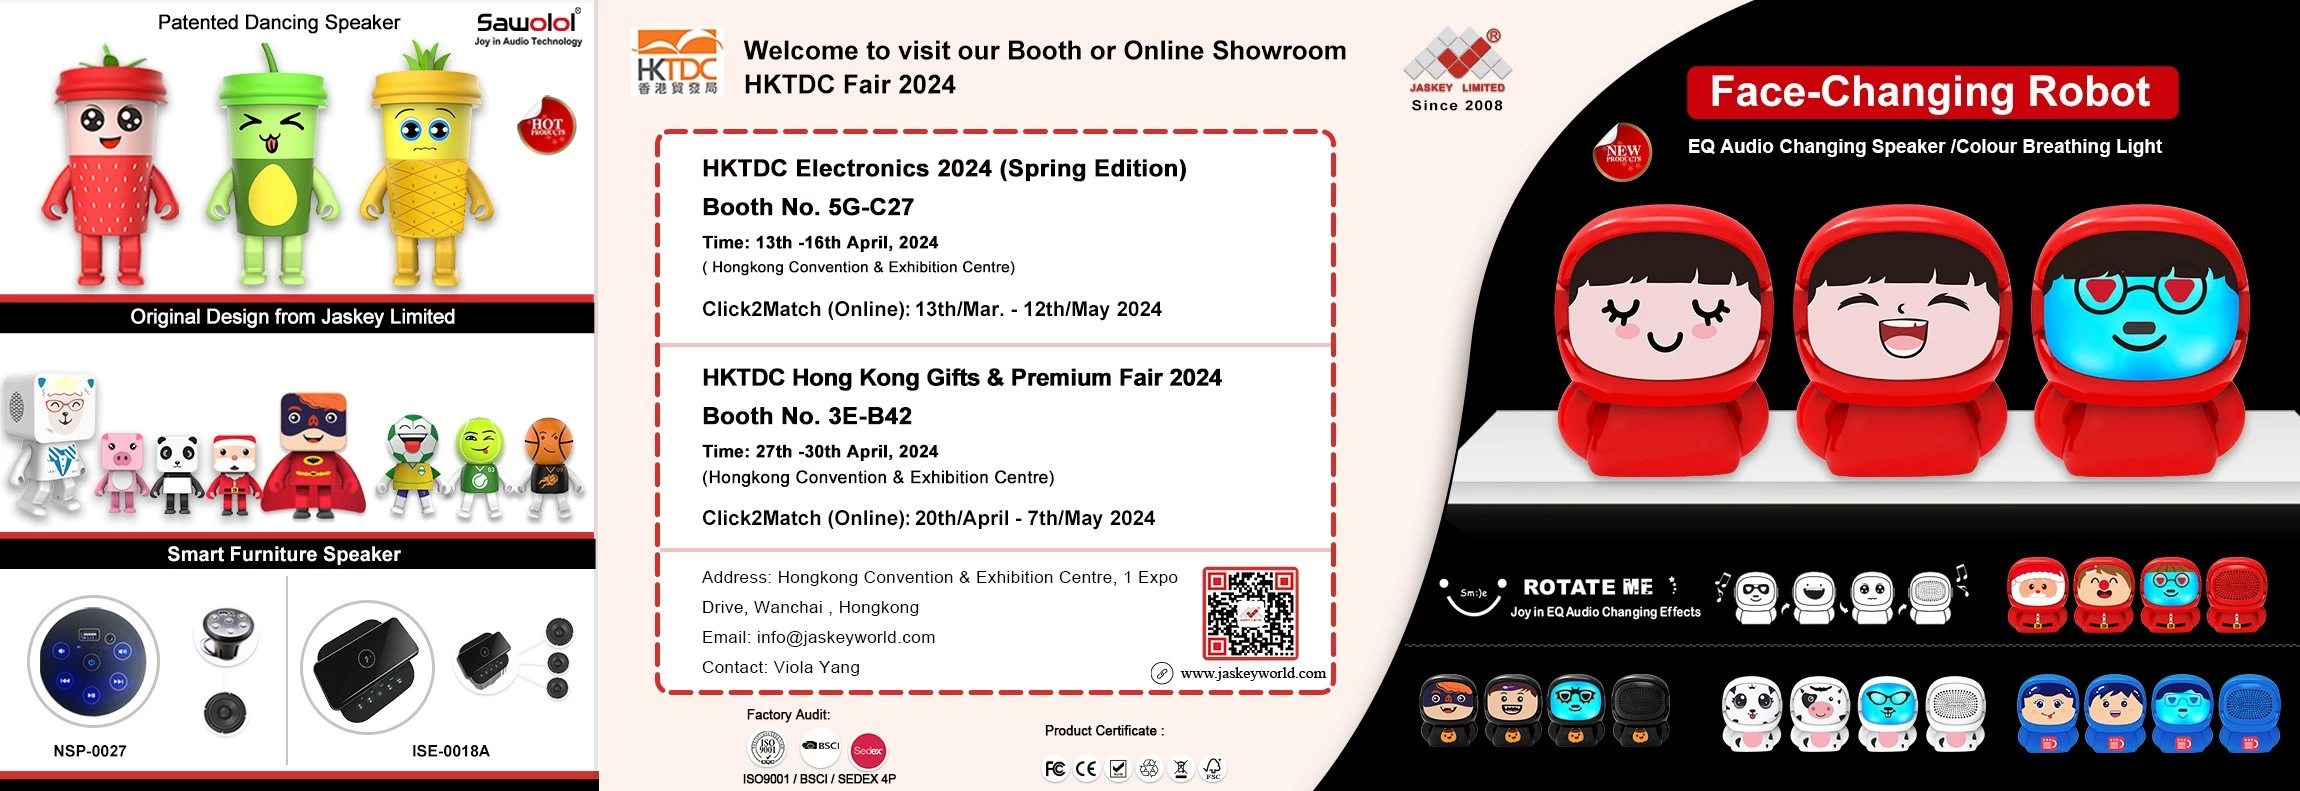 HKTDC Electronics 2024 (Frühjahrsausgabe) und HKTDC Hong Kong Gifts & Premium Fair 2024